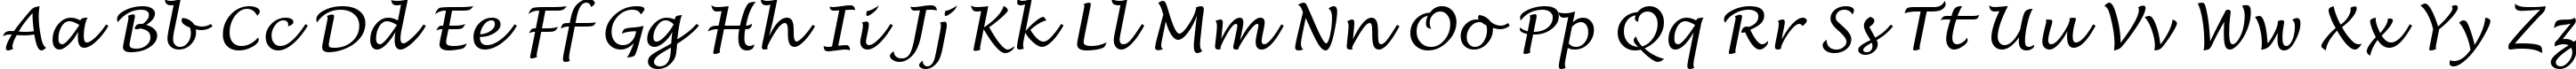 Пример написания английского алфавита шрифтом Lucida Handwriting Italic